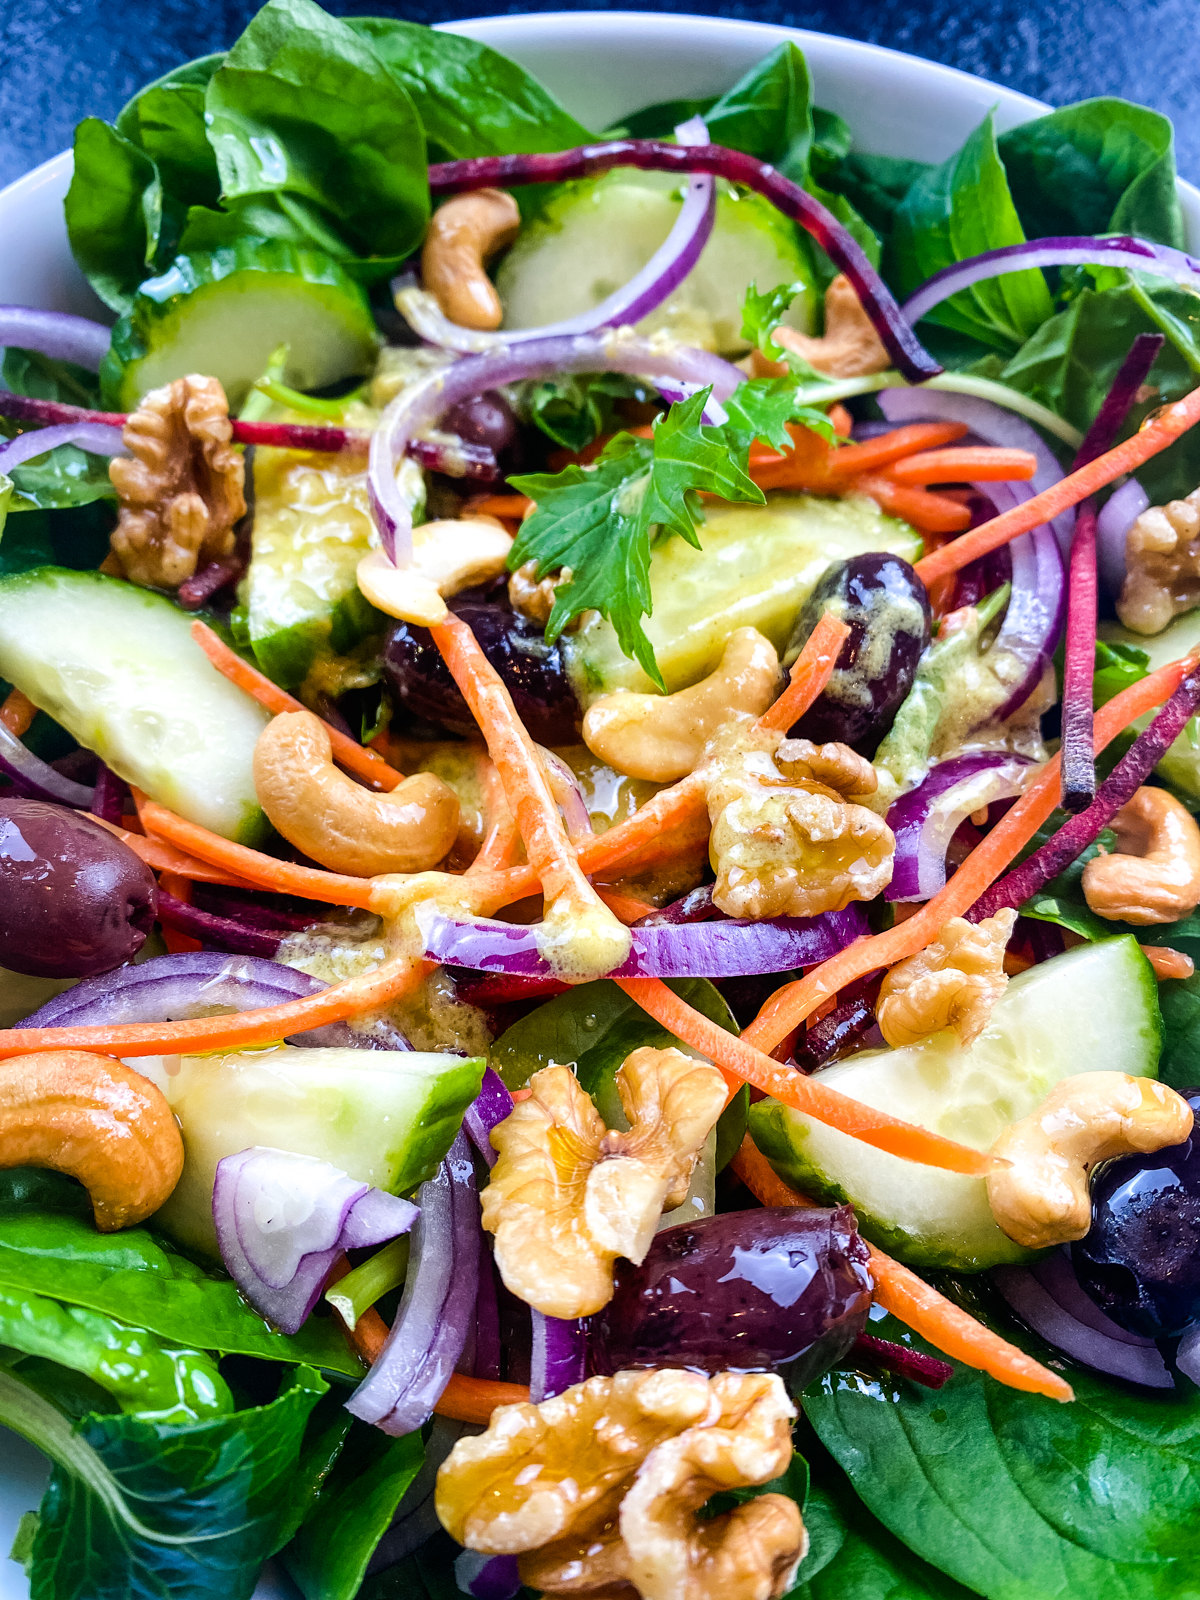 Gourmet Mixed Green Salad In A Bowl